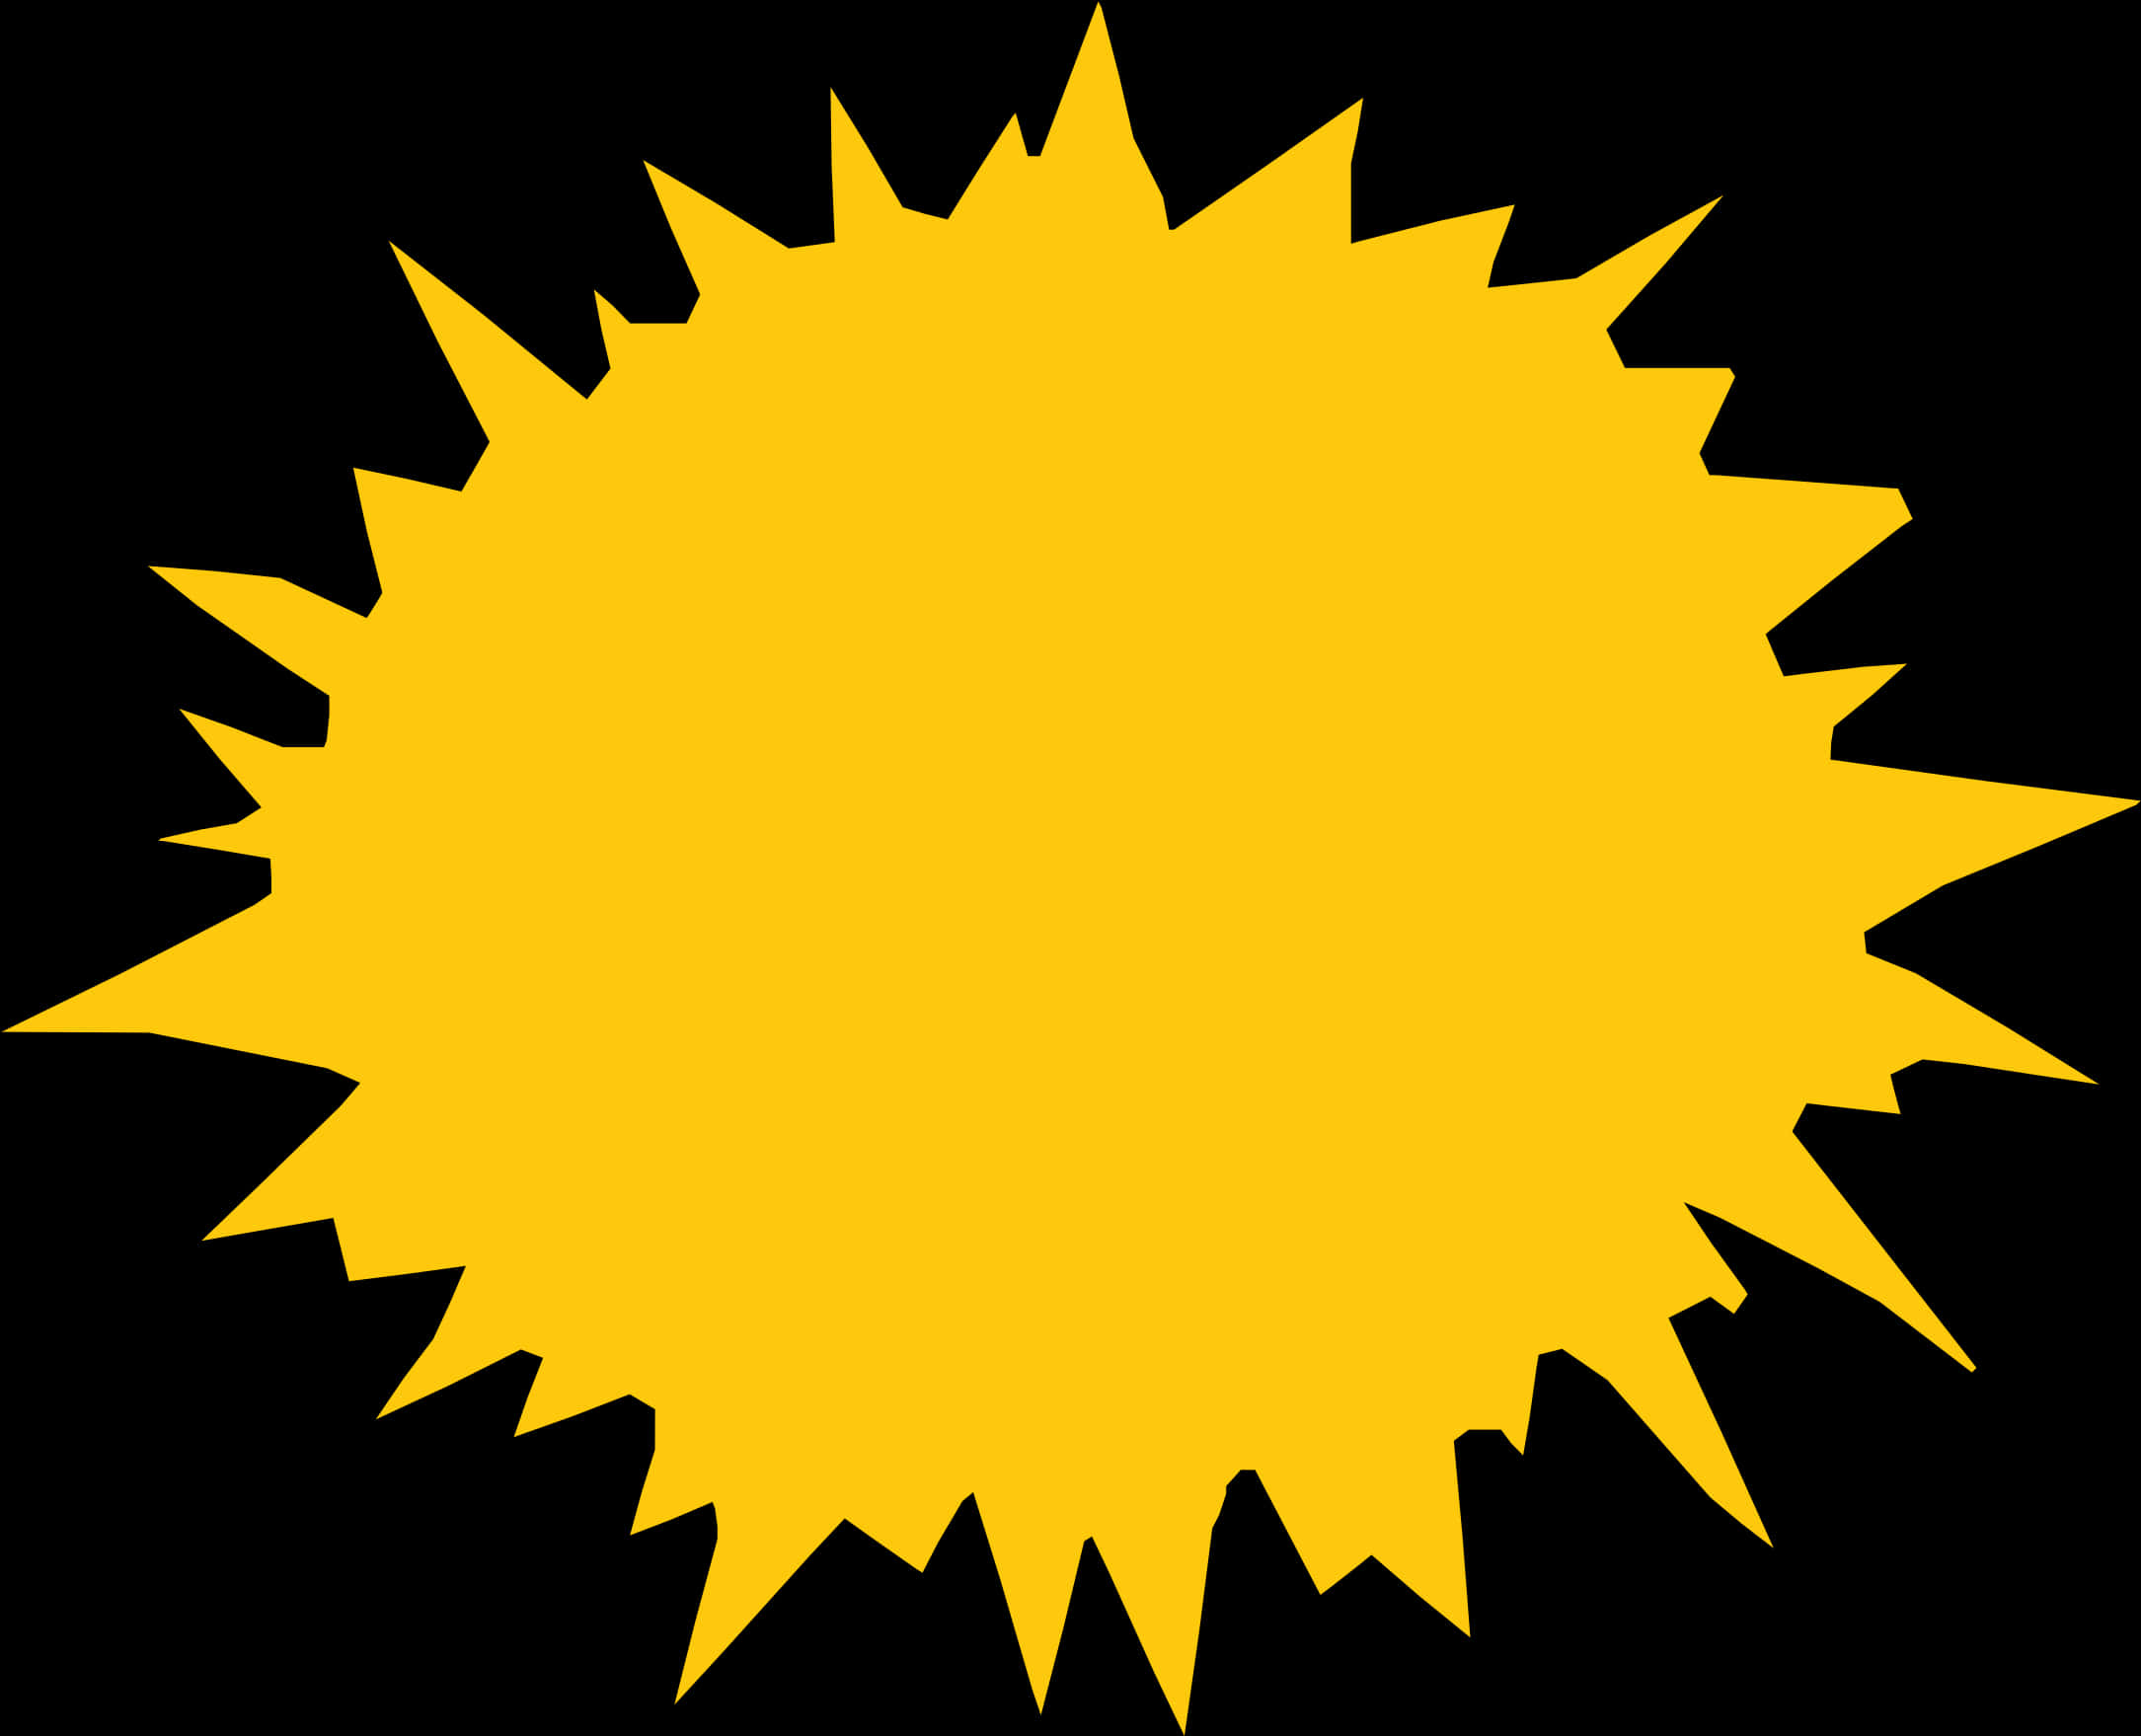 Yellow Starburst Graphicon Black Background PNG image